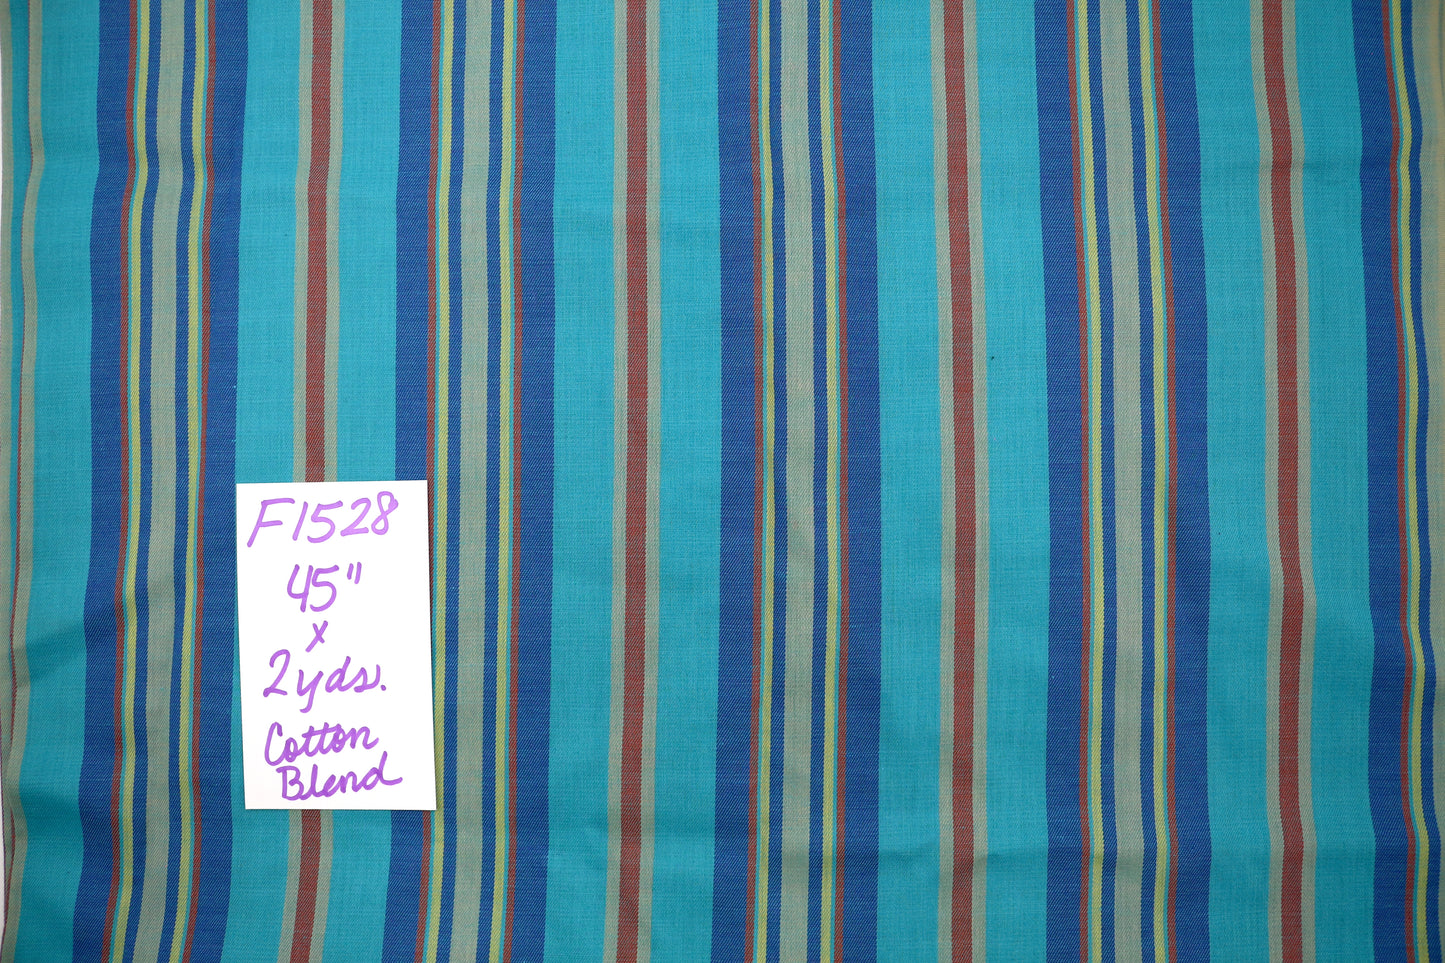 Vintage 50's Stripe Cotton Blend Fabric 45" x 2 yds